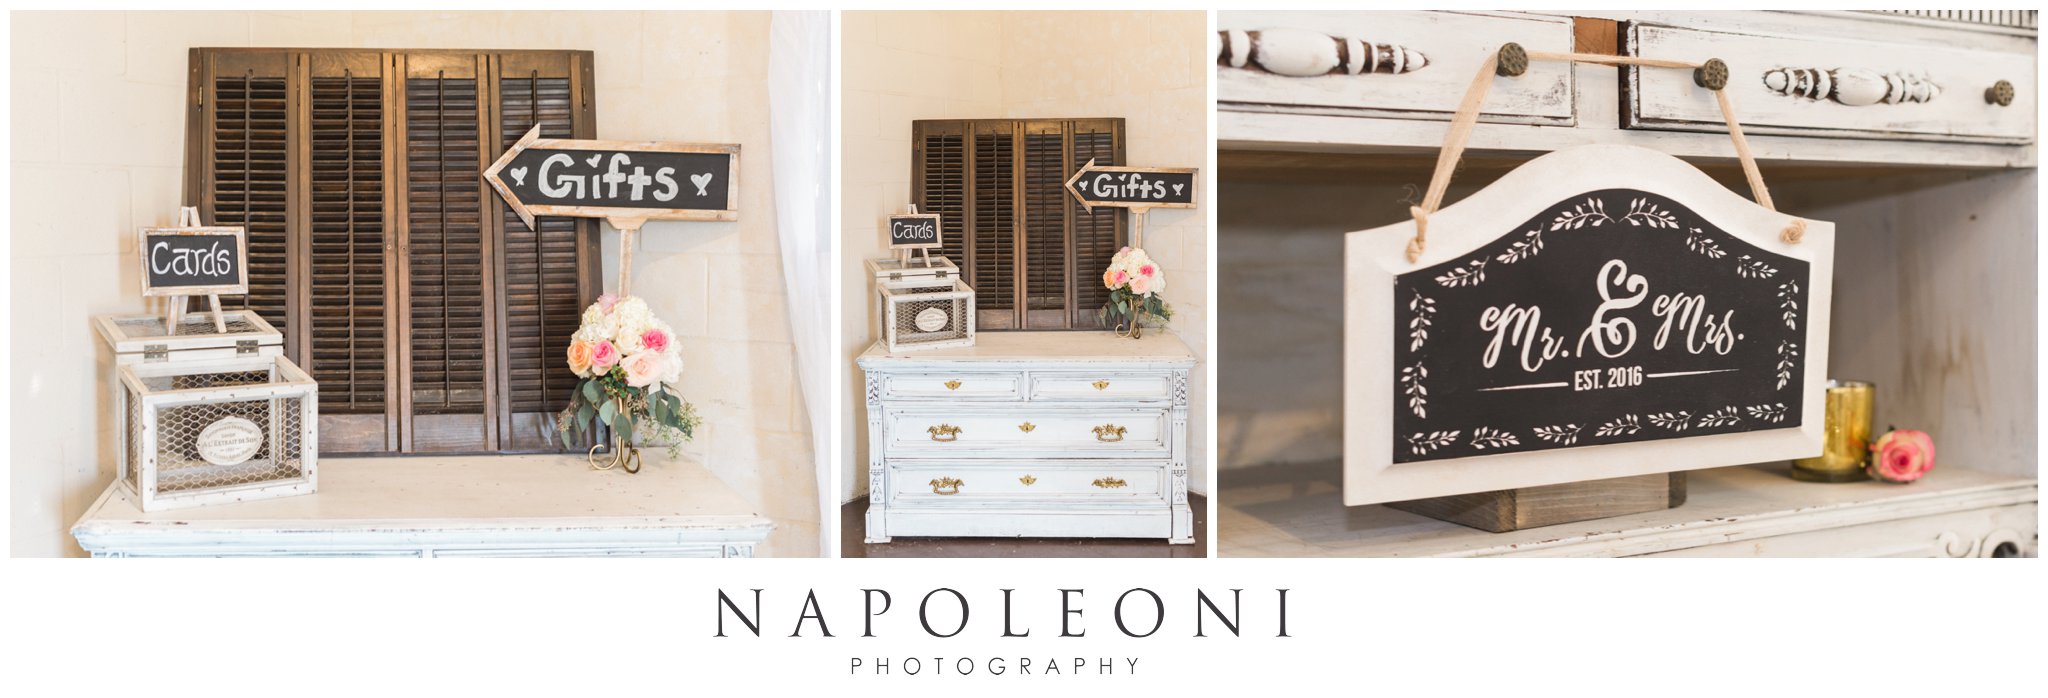 napoleoni-photography_0359